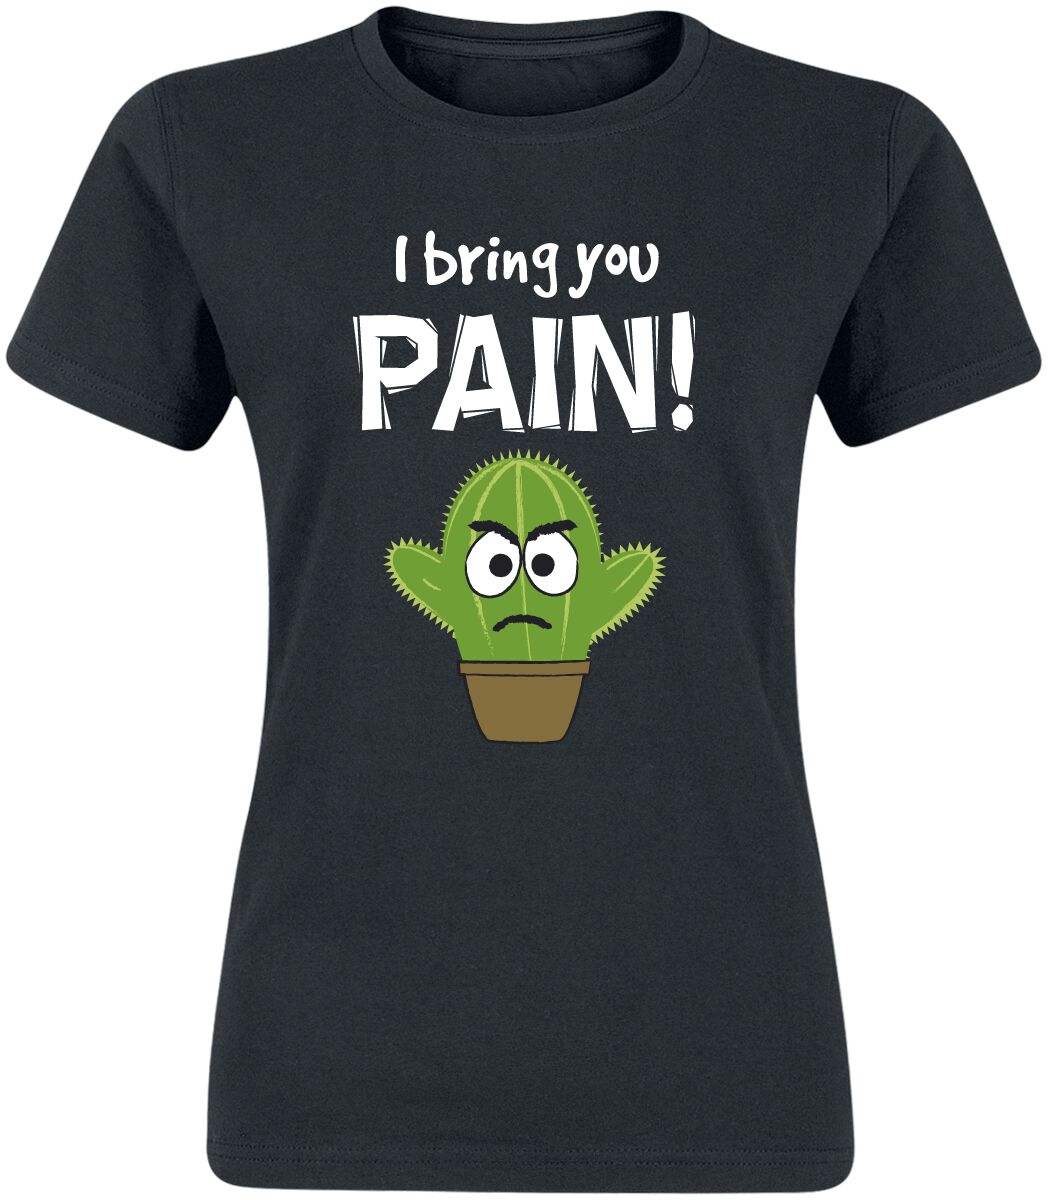 Slogans I Bring You Pain! T-Shirt black